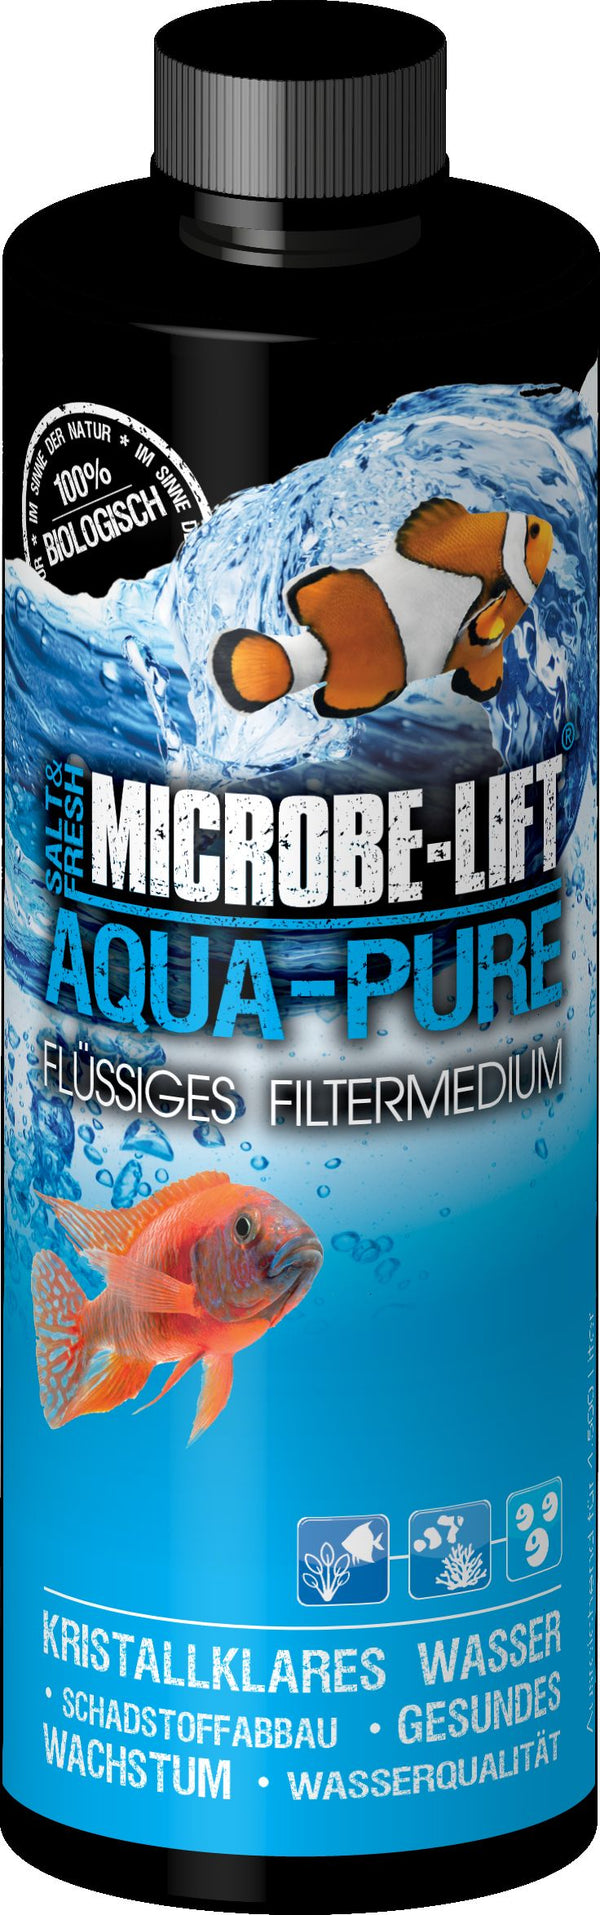 Aqua-Pure - flüssiges Filtermedium mit Bakterien (236 ml.) Microbe-Lift